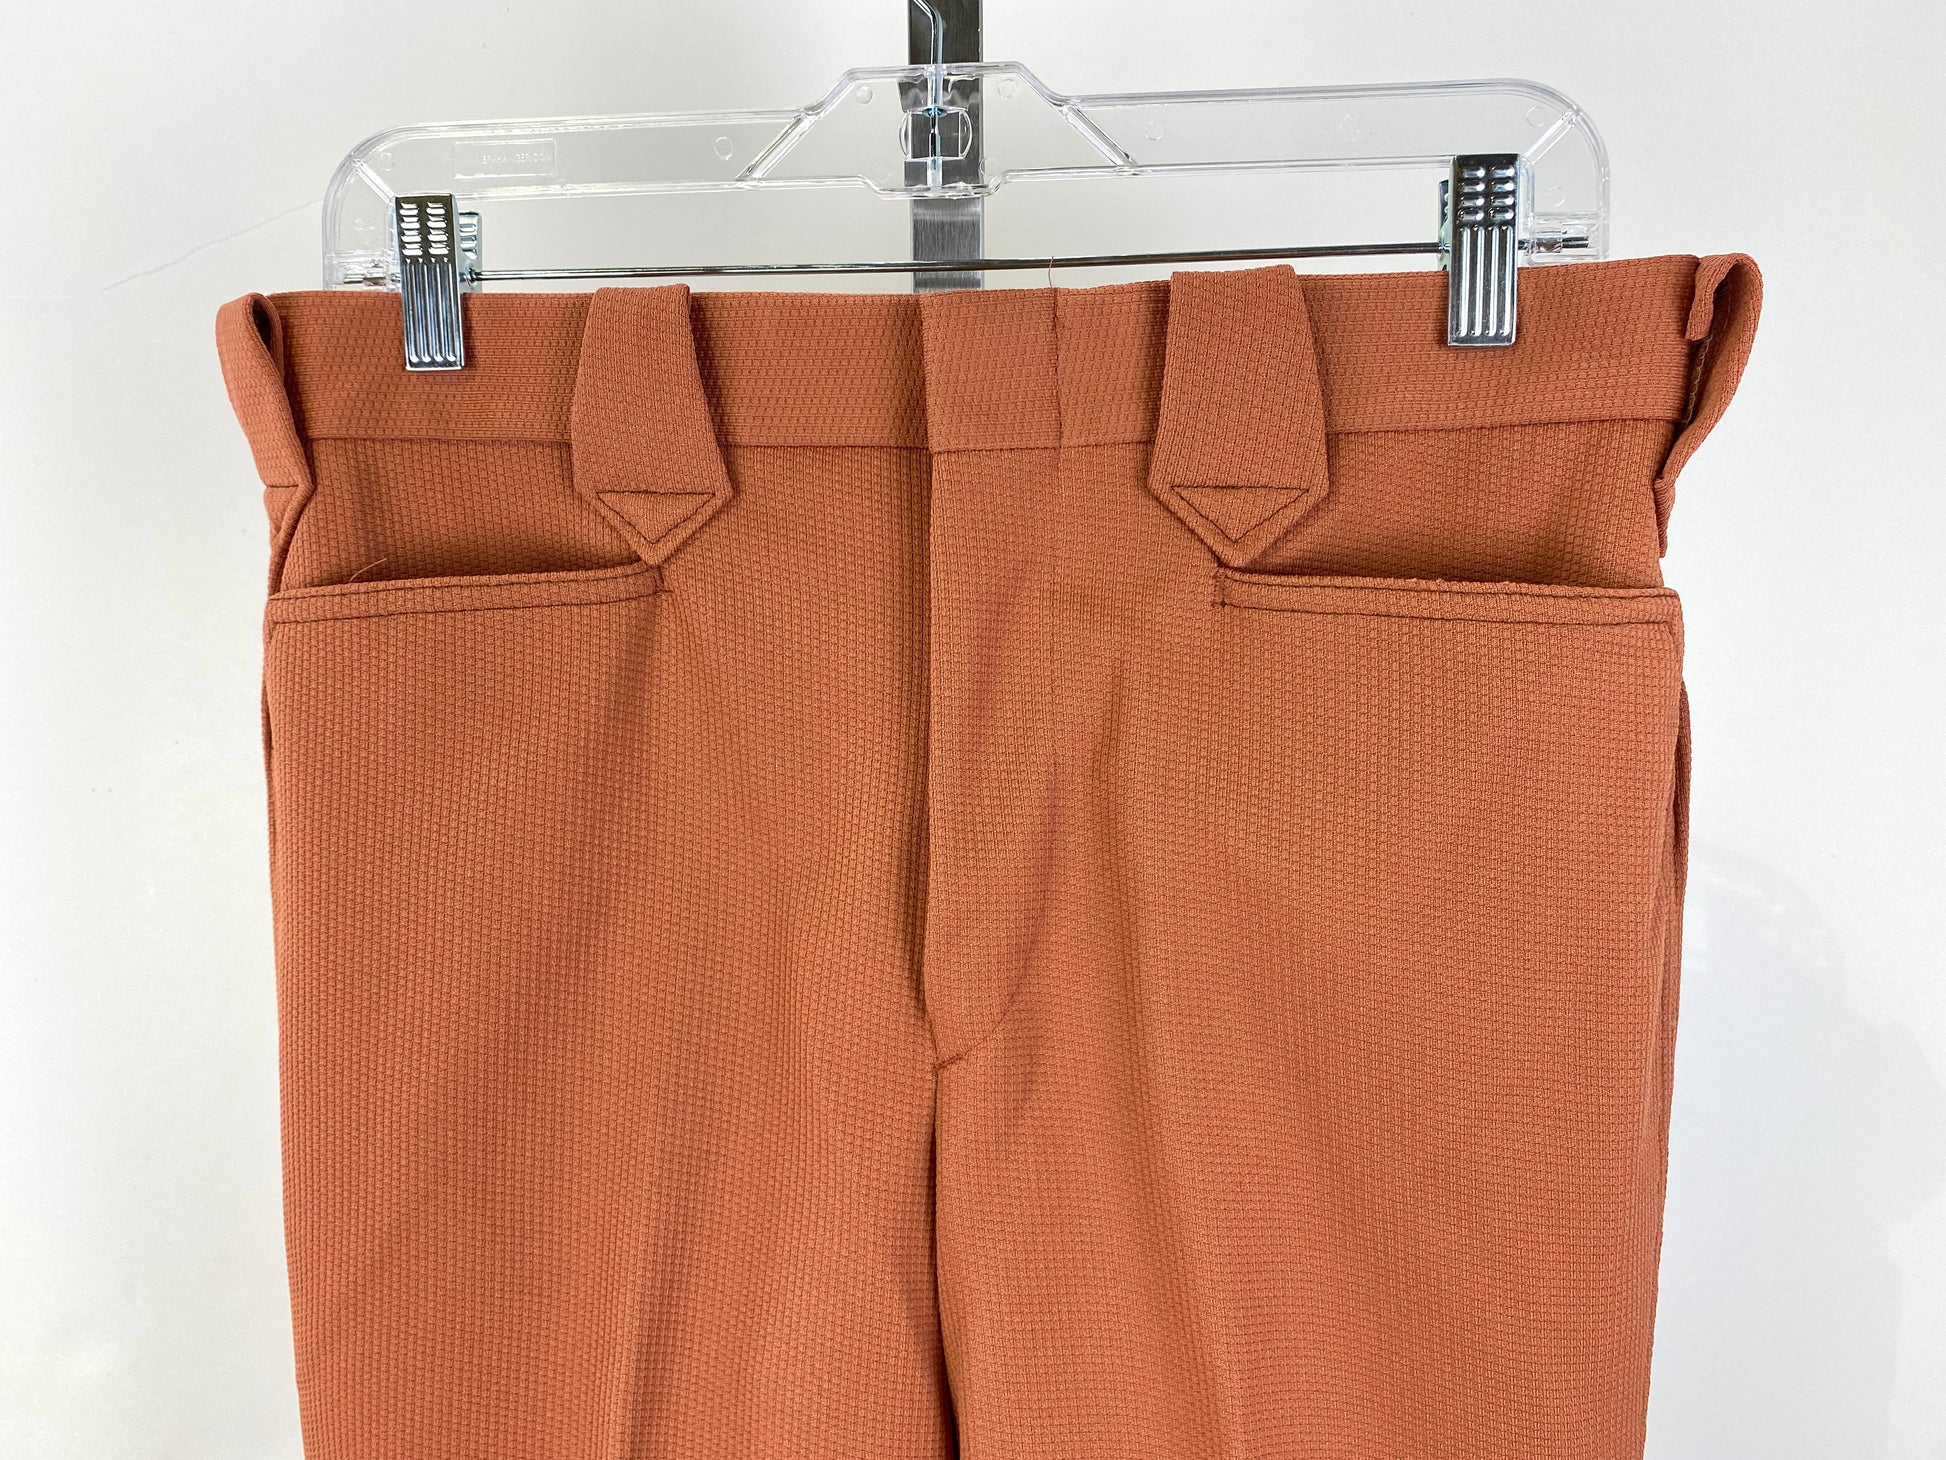 Vintage 1970s Deadstock Lee Polyester Flared Trousers, Men's Rust Slacks, NOS